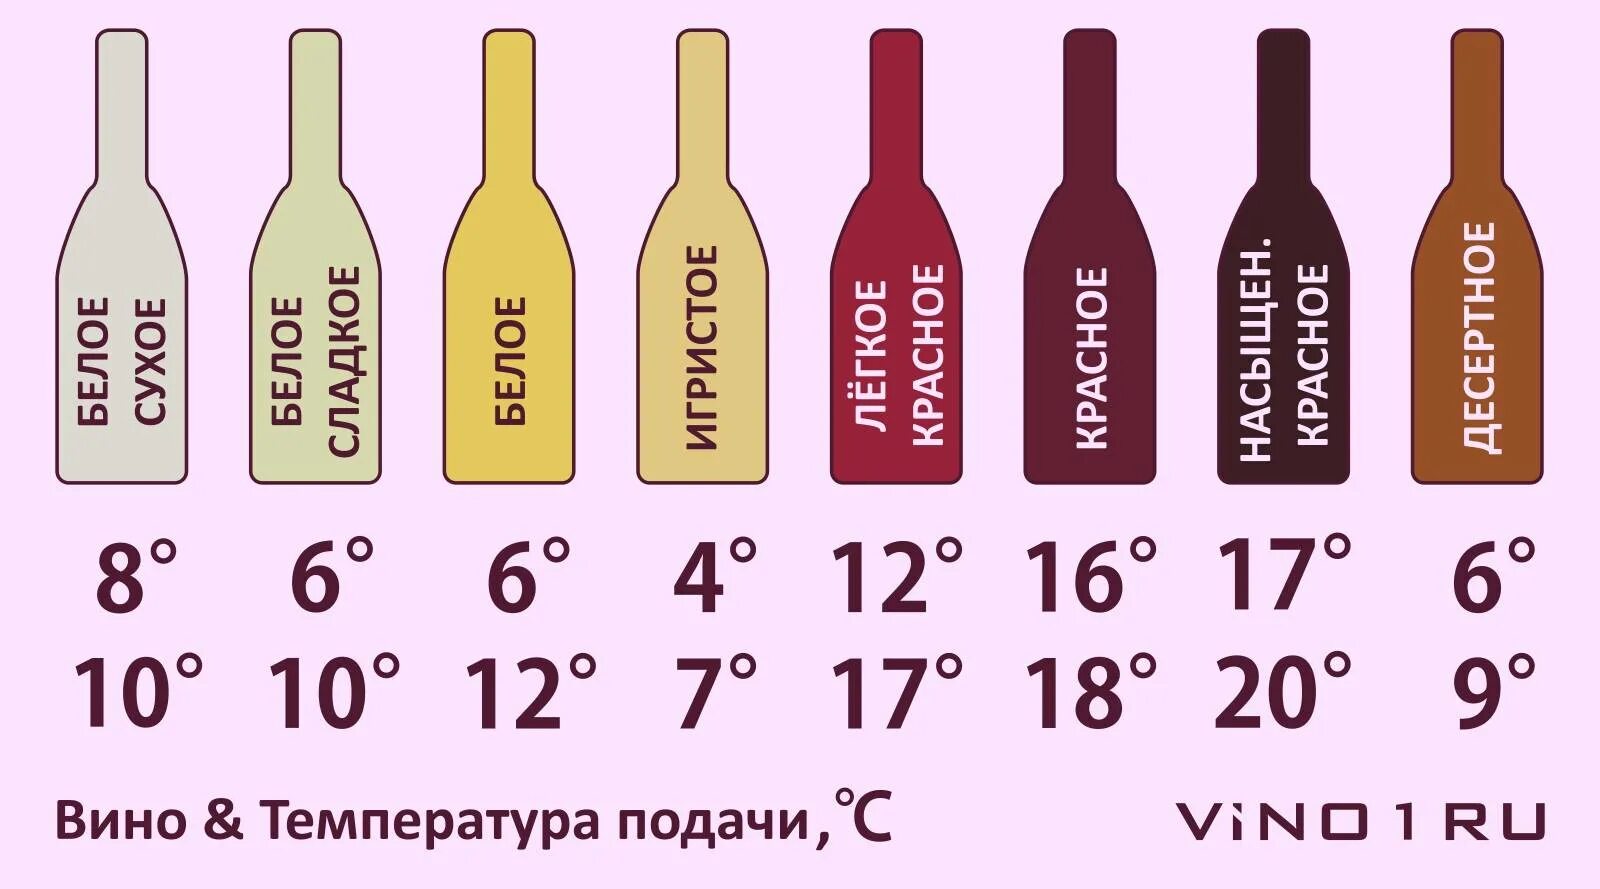 Сколько можно сухого вина. Сколько градусов в вине. Температура подачи вина. Градусы в вине. Темпераиурамхранения вина.